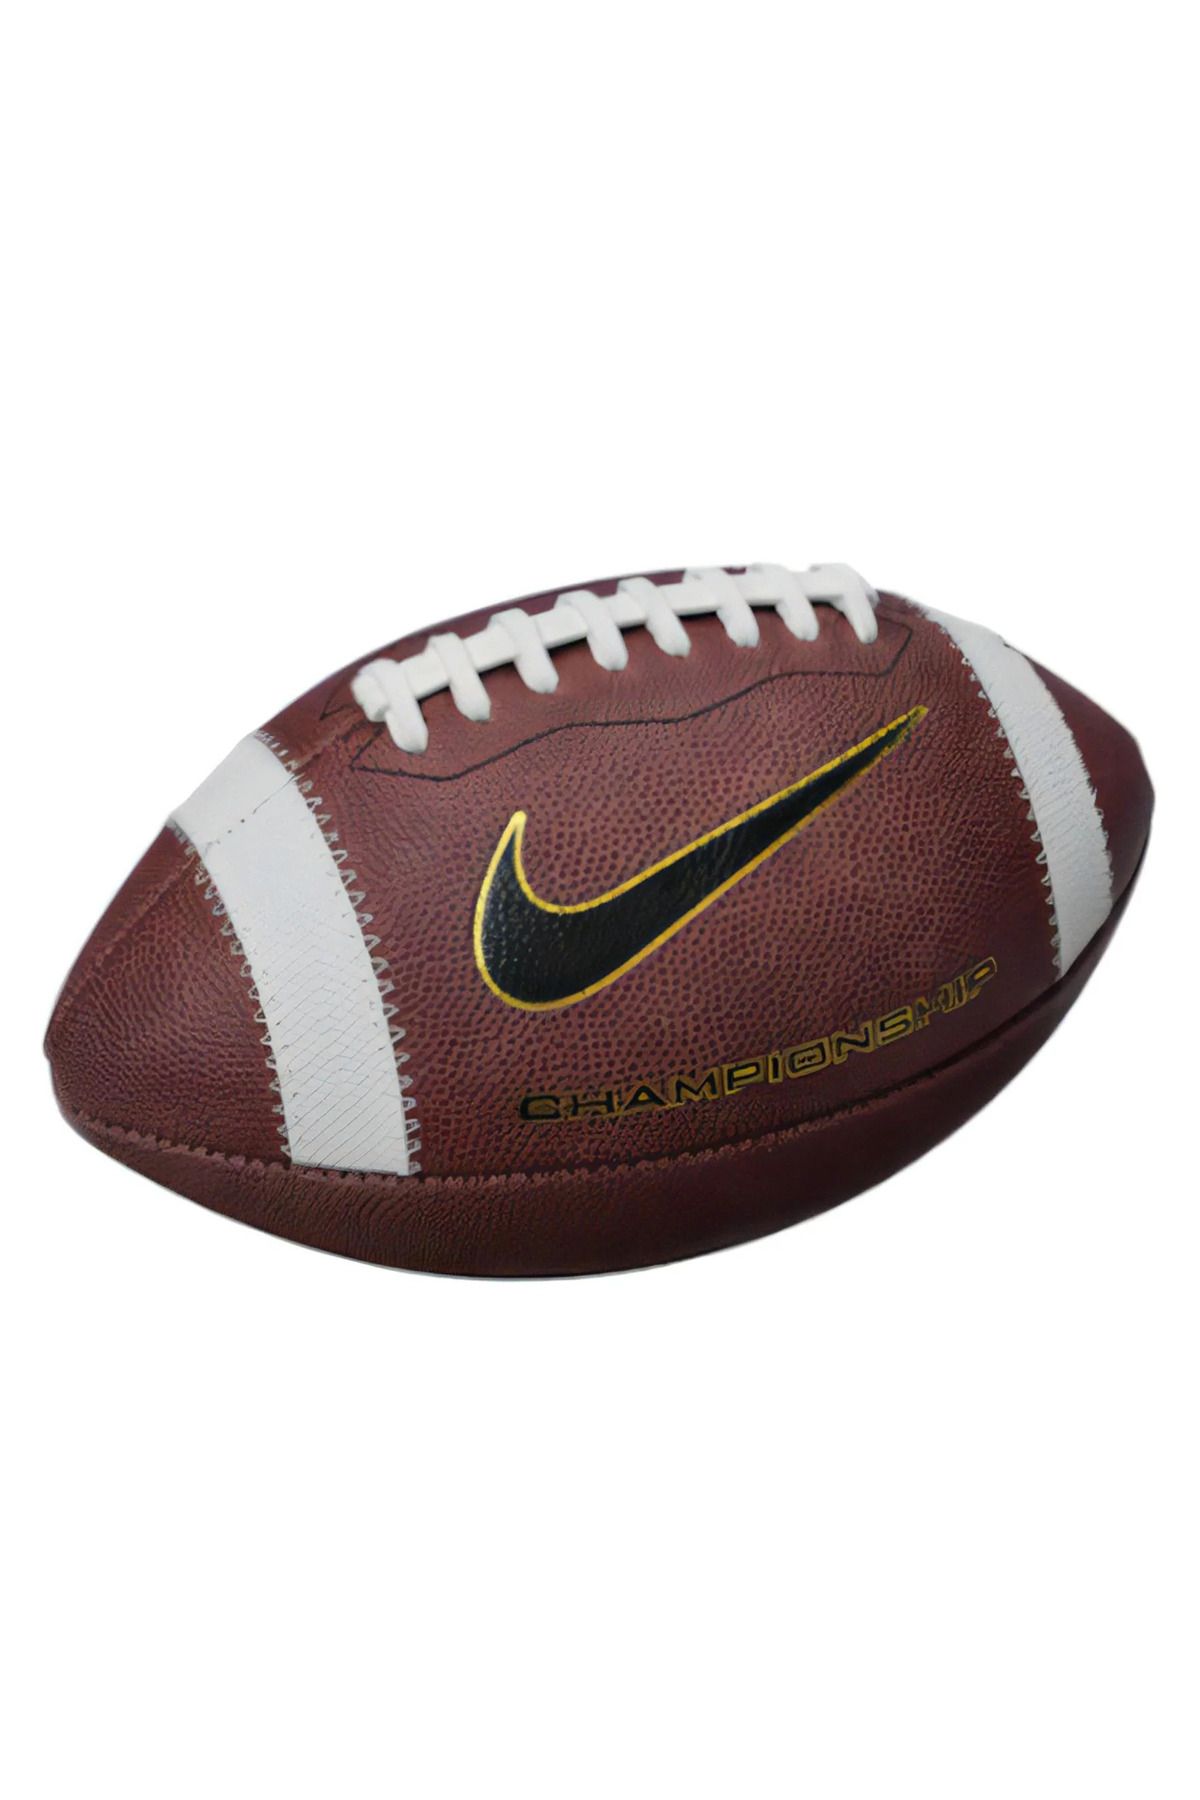 Nike Championship Amerikan Futbolu Resmi Maç Topu